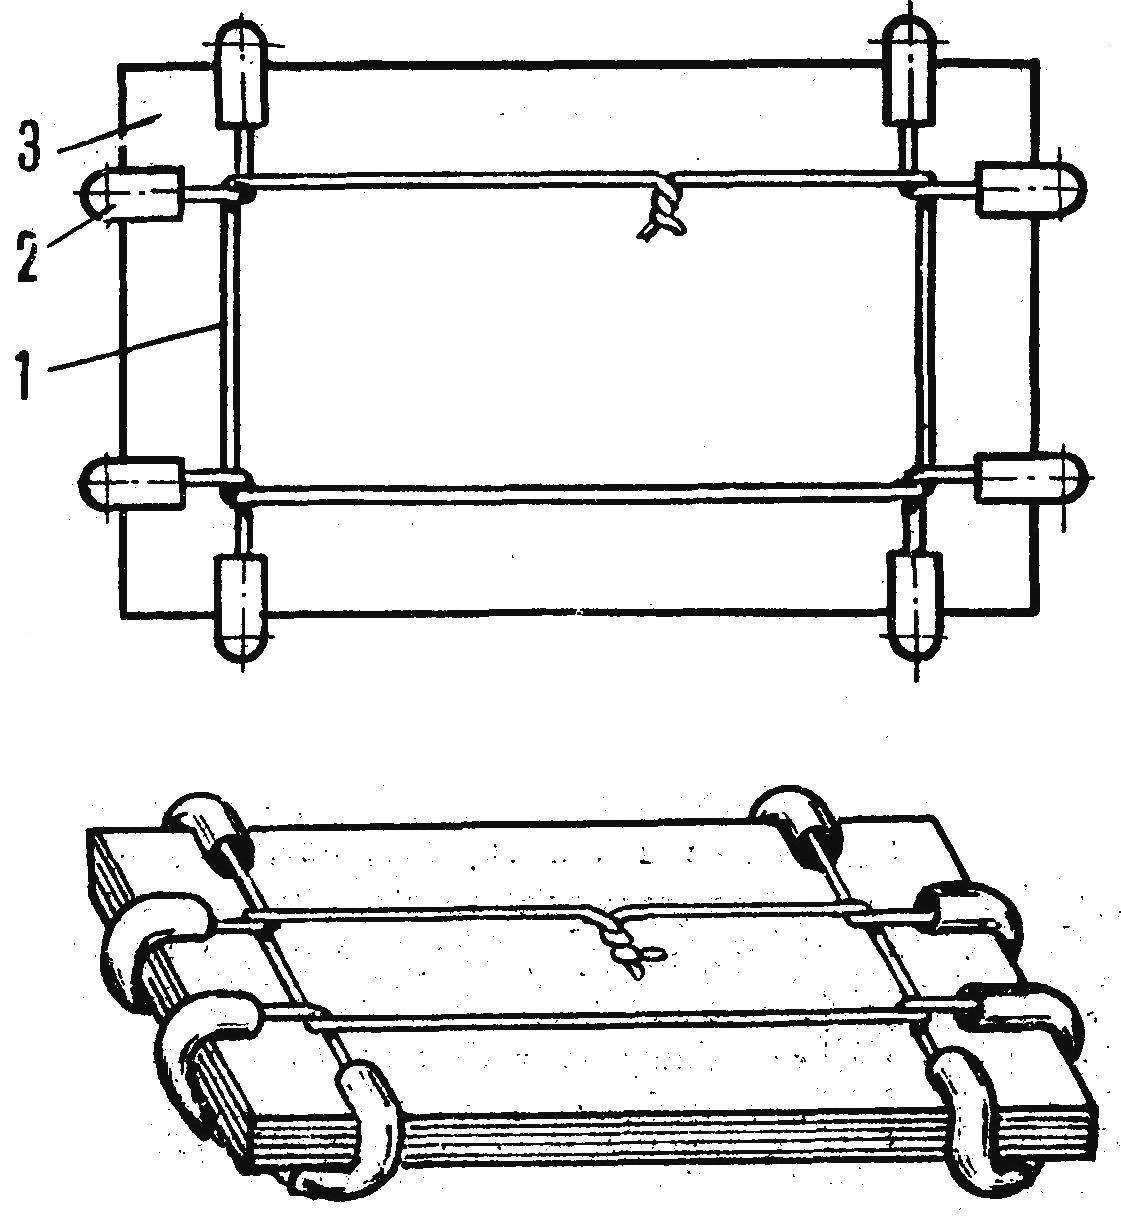 Fig. 7. Ring packaging